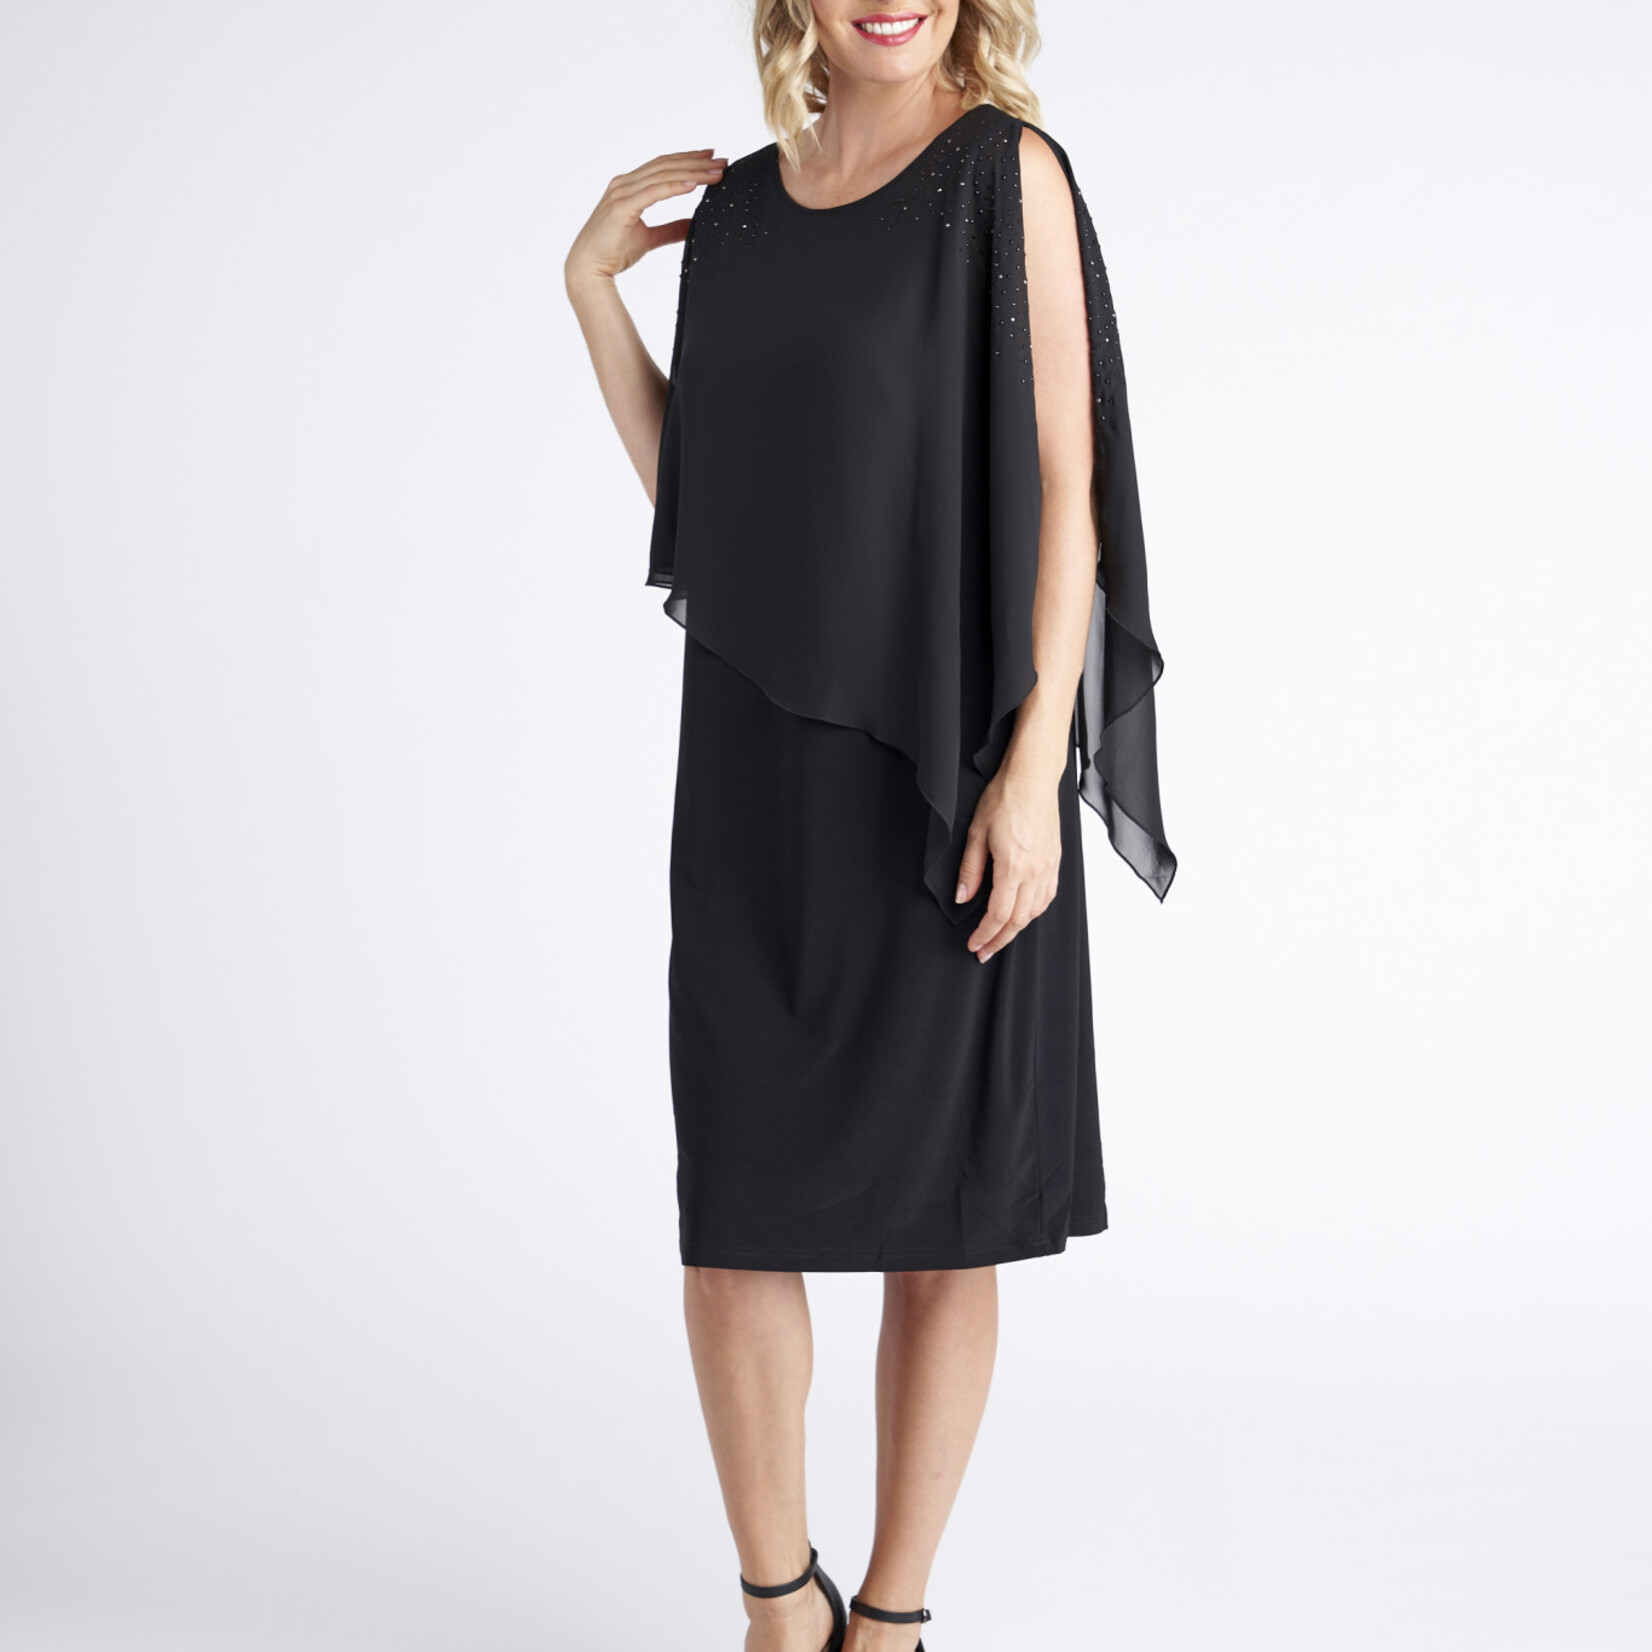 Vivid International Black Chiffon  Sparkle Overlay &  Jersey Dress